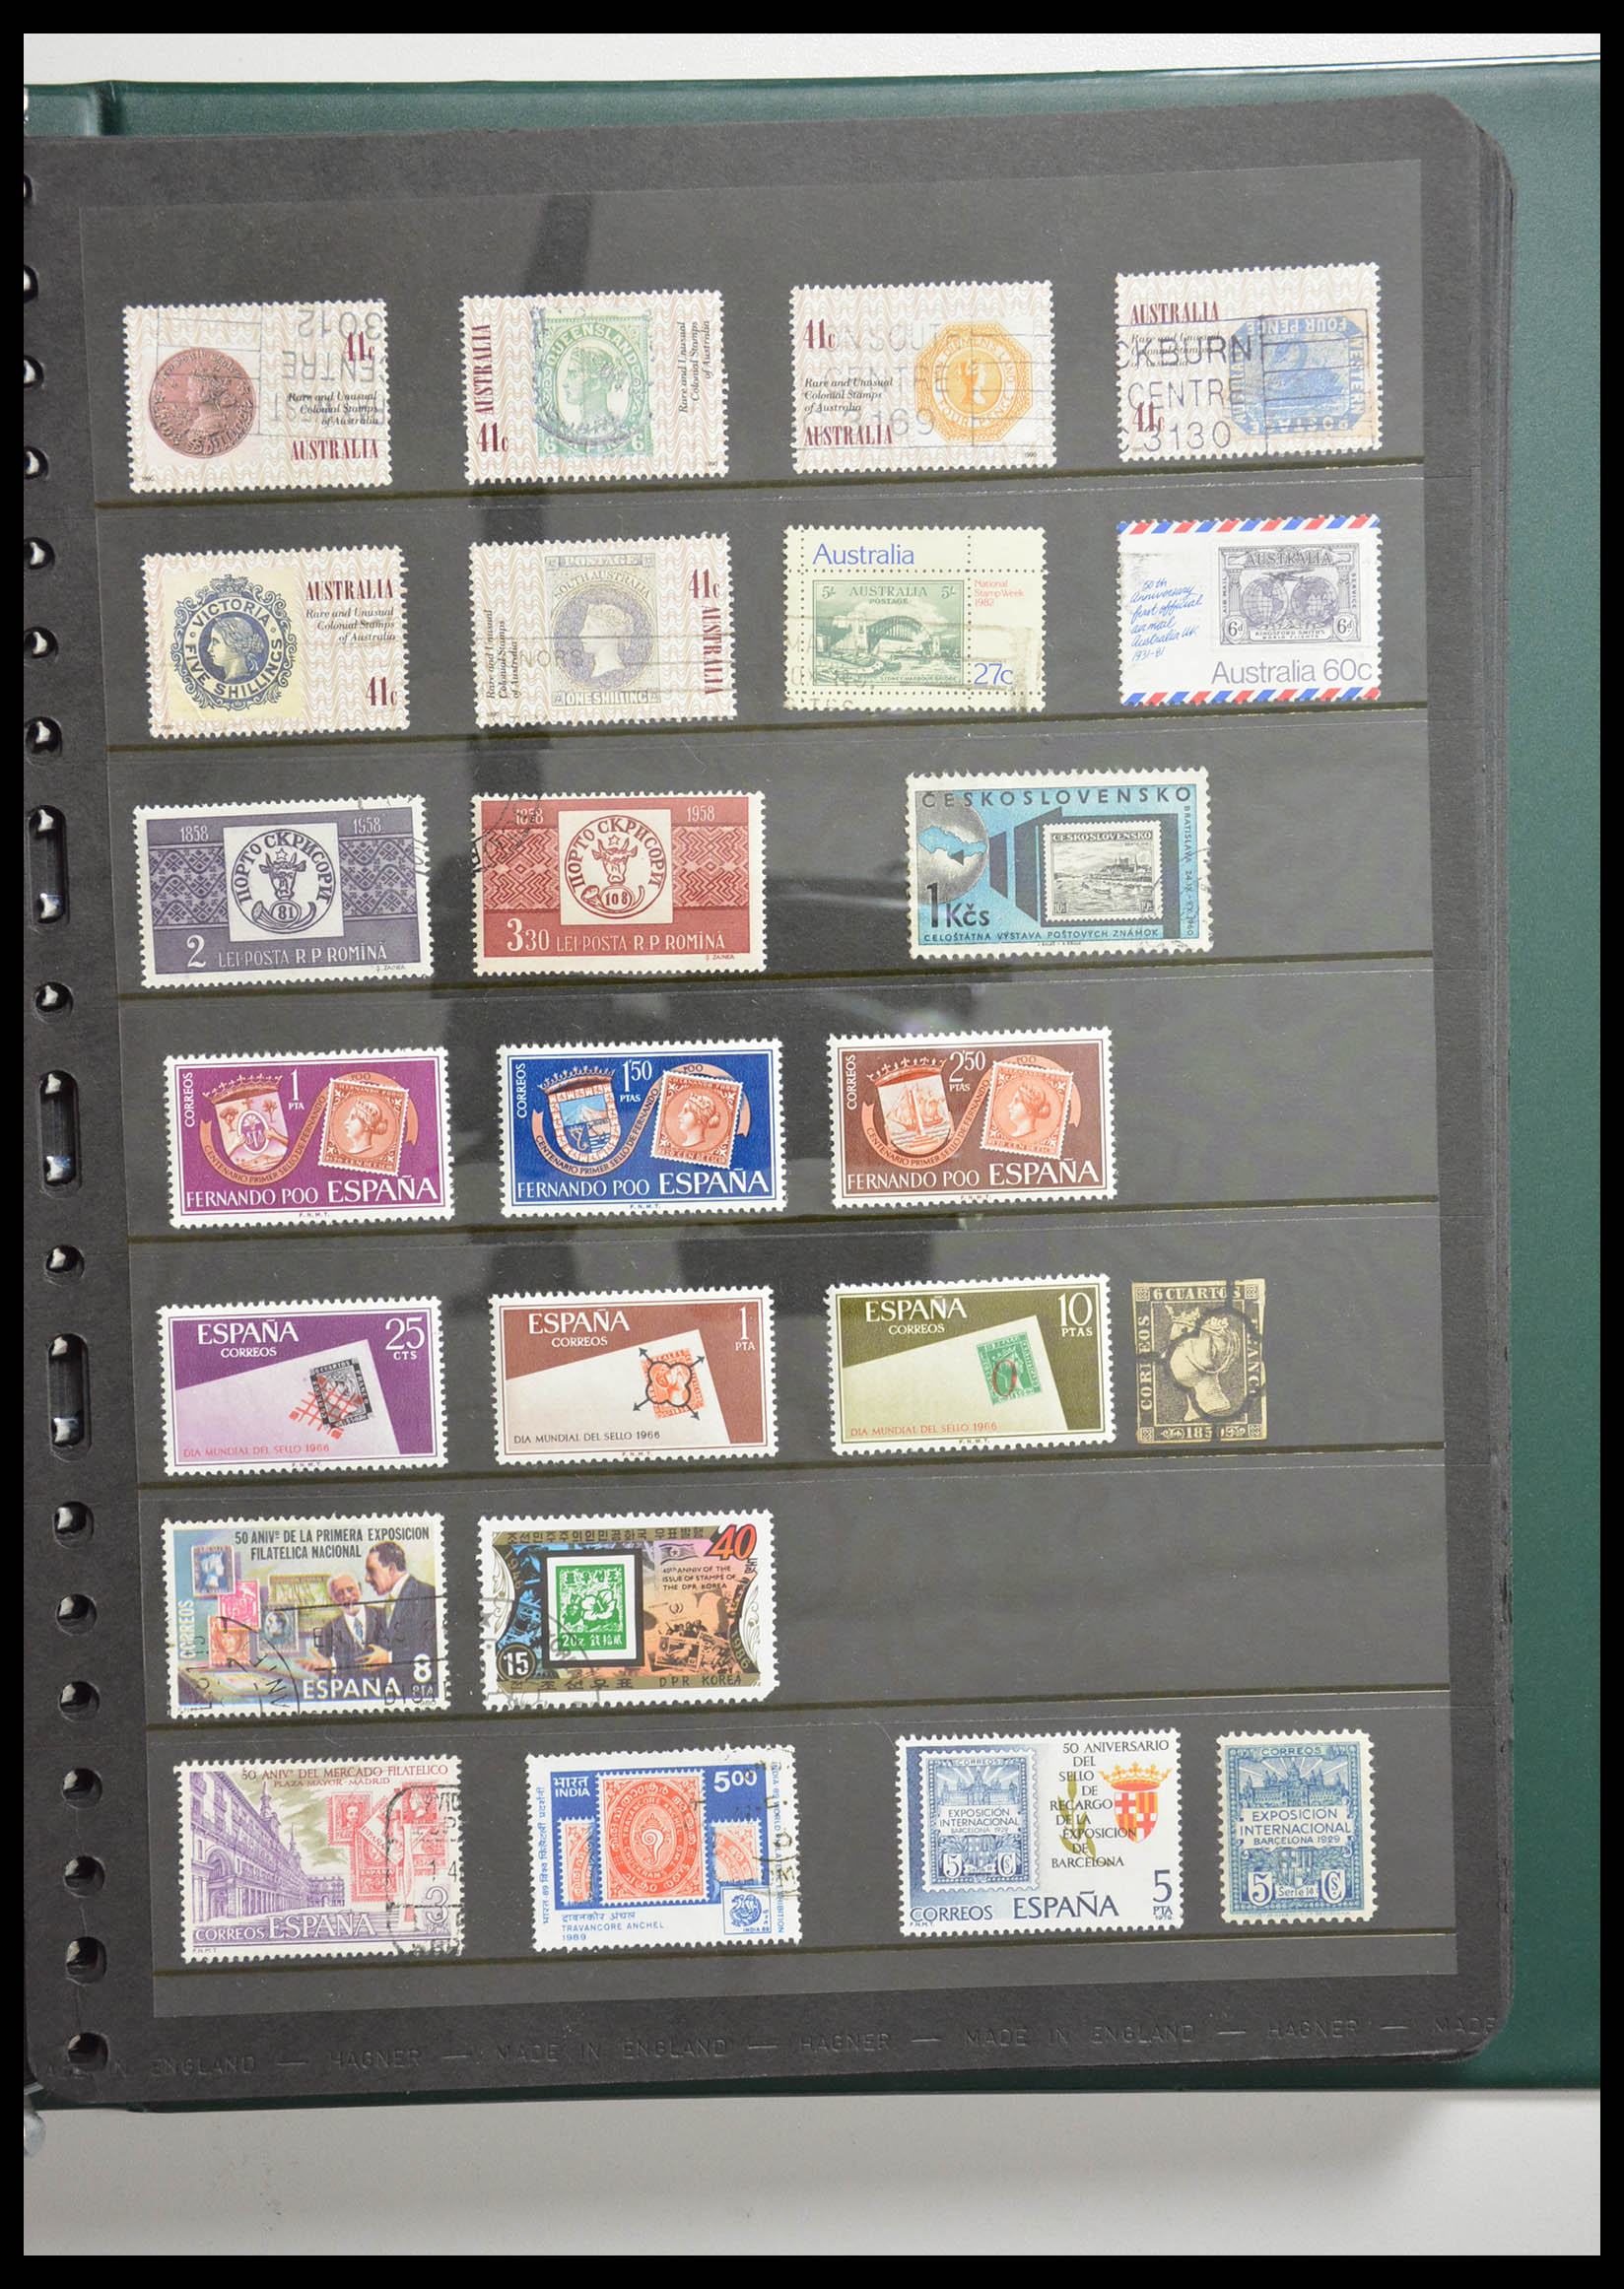 28337 008 - 28337 Postzegel op postzegel 1840-2001.